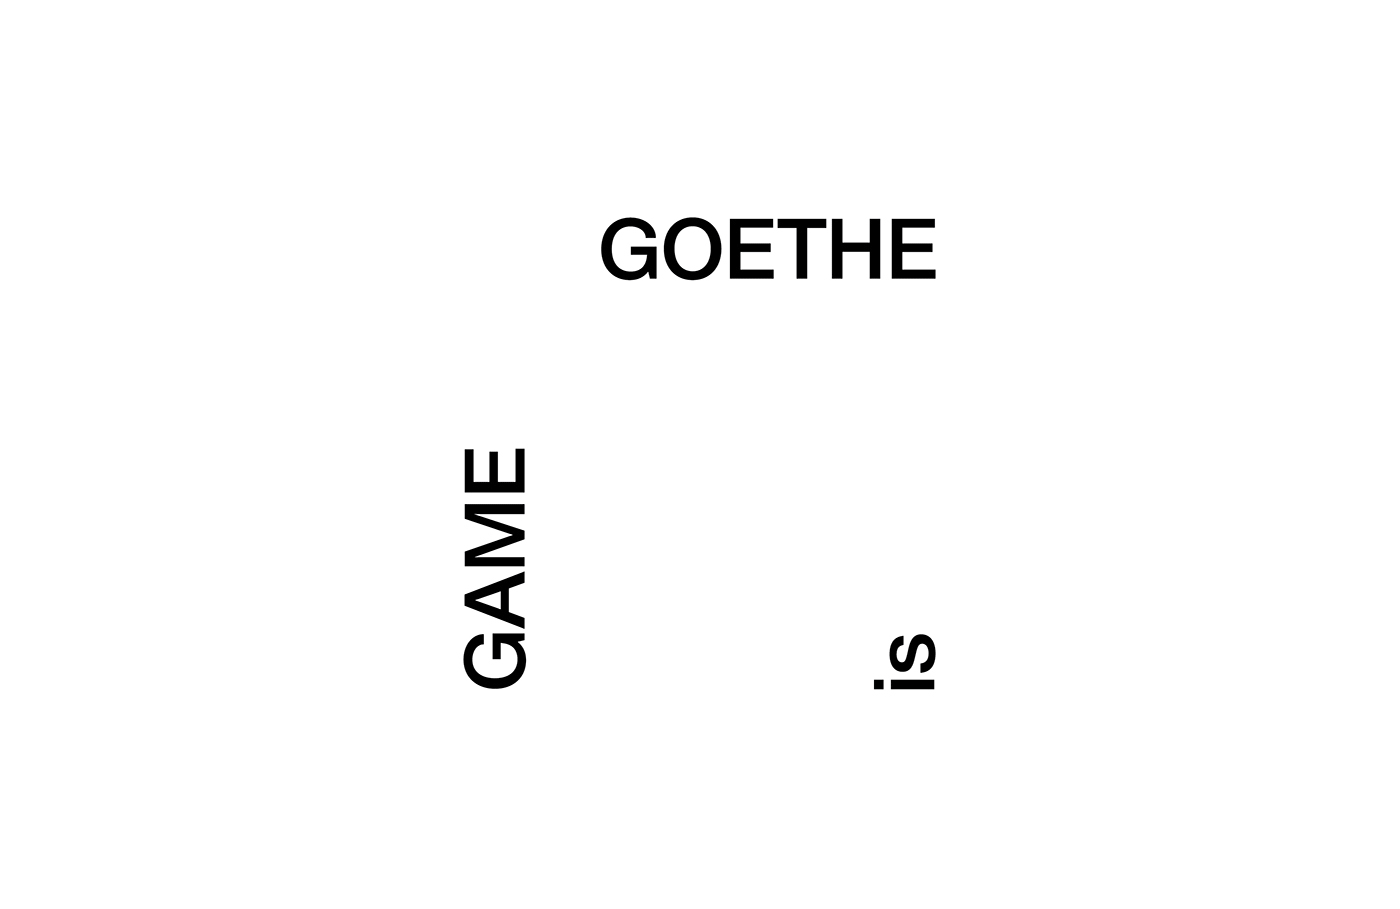 Goethe is Game | 2016- 2018